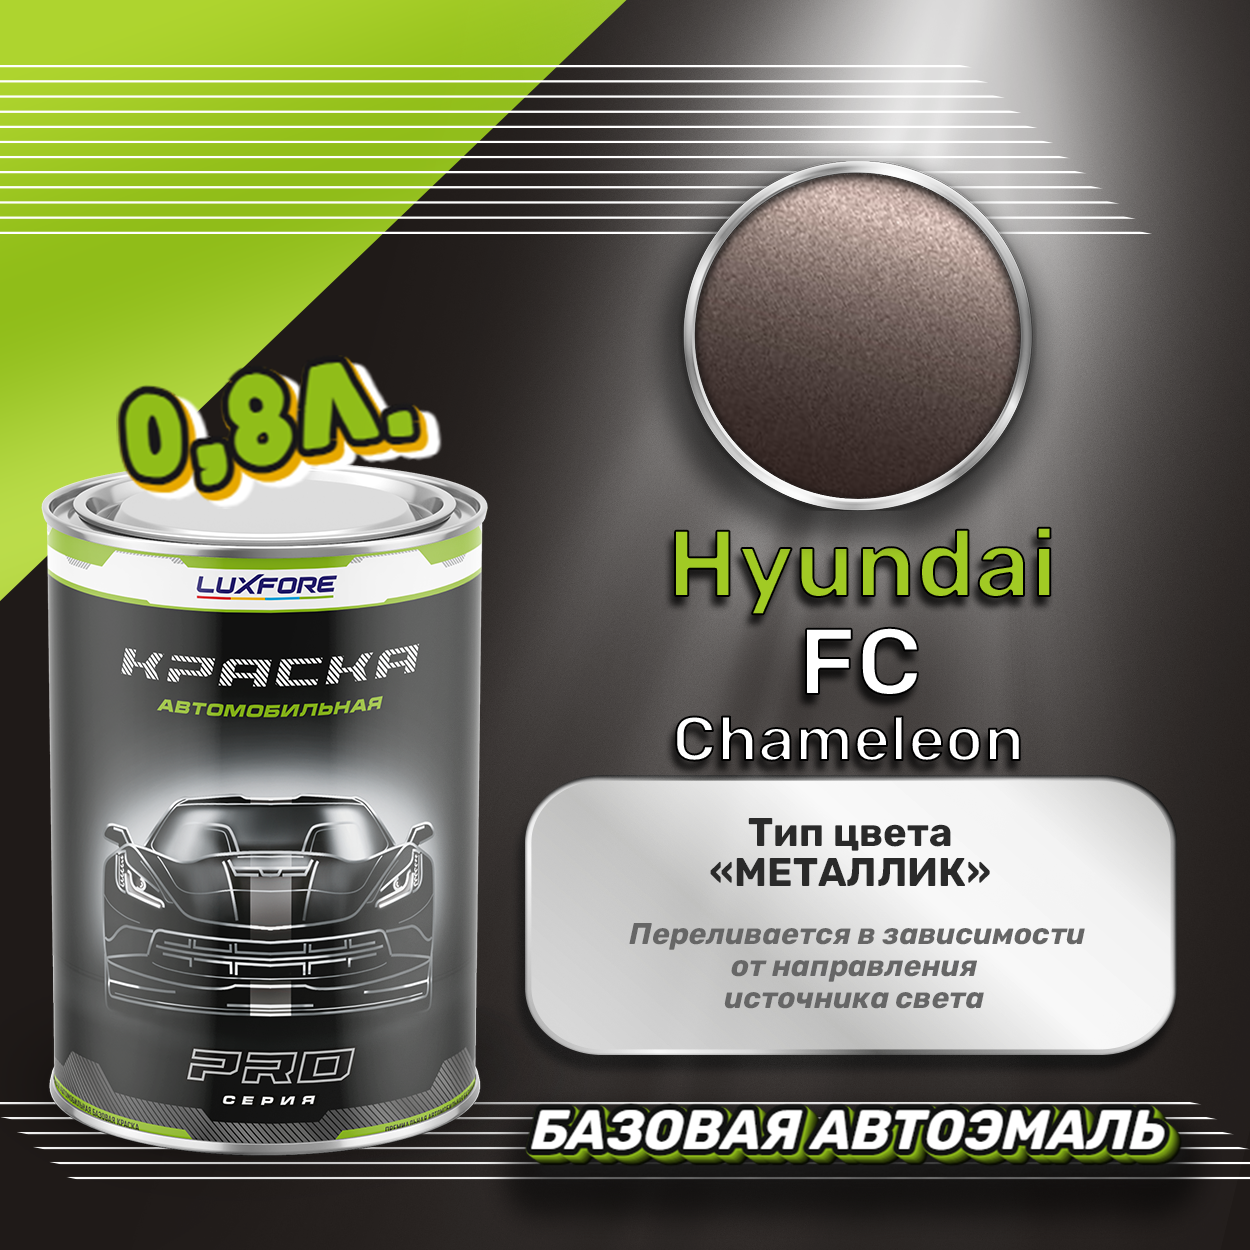 Luxfore краска базовая эмаль Hyundai FC Chameleon 800 мл